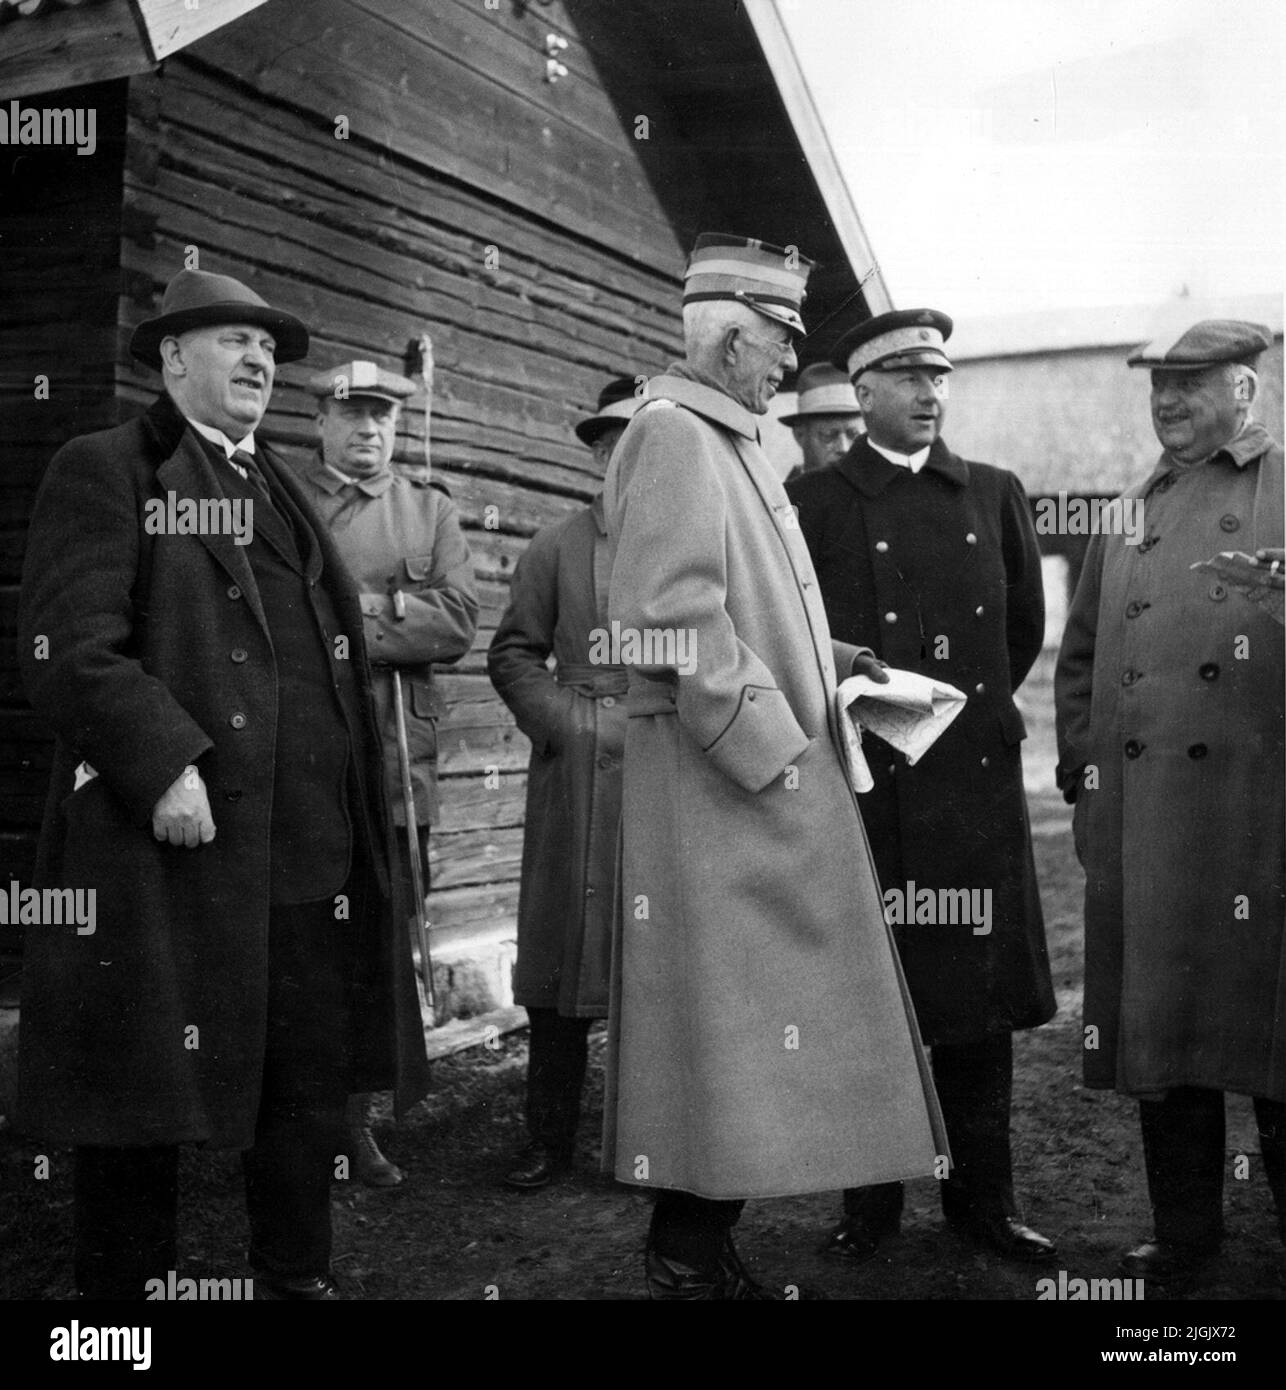 Manöver From left stands Fabian Månsson, Lieutenant Holmström and King Gustaf V, on field maneuver 1935 or 1936. Stock Photo